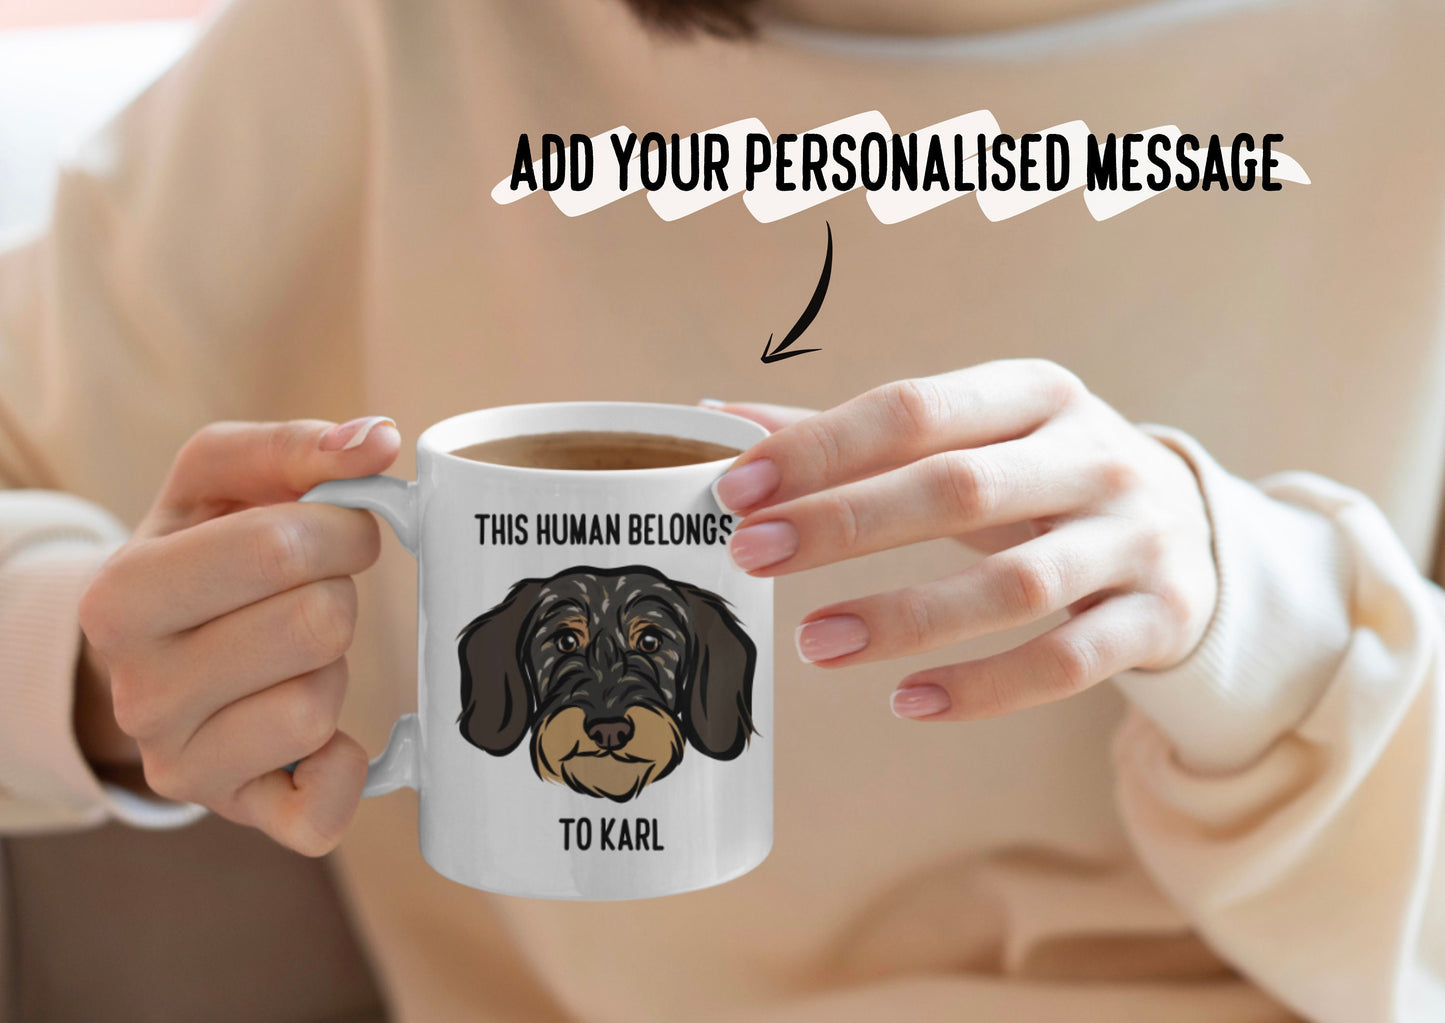 Wire Haired Dachshund Mug/ Personalised Sausage Dog Face Ceramic Mug/ Custom Dachshund Quote Gifts/ Sausage Dog Owner Lover Coffee Mug